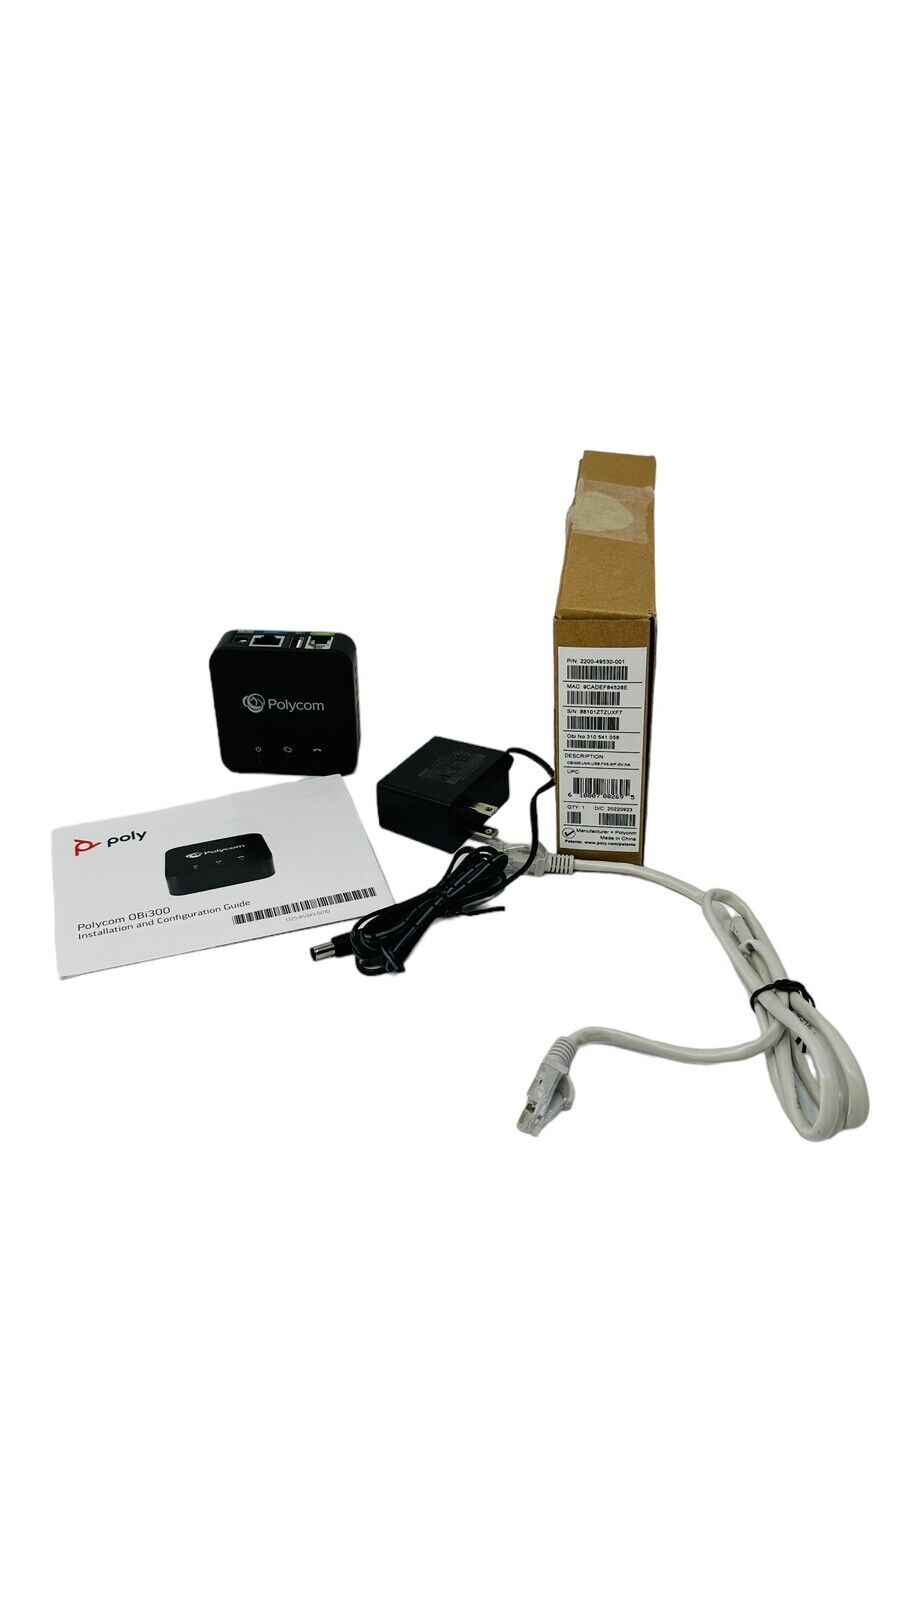 Polycom OBi300 2200-49530-001 OBI 310 Voice Adapter USB FXS SIP GV NA